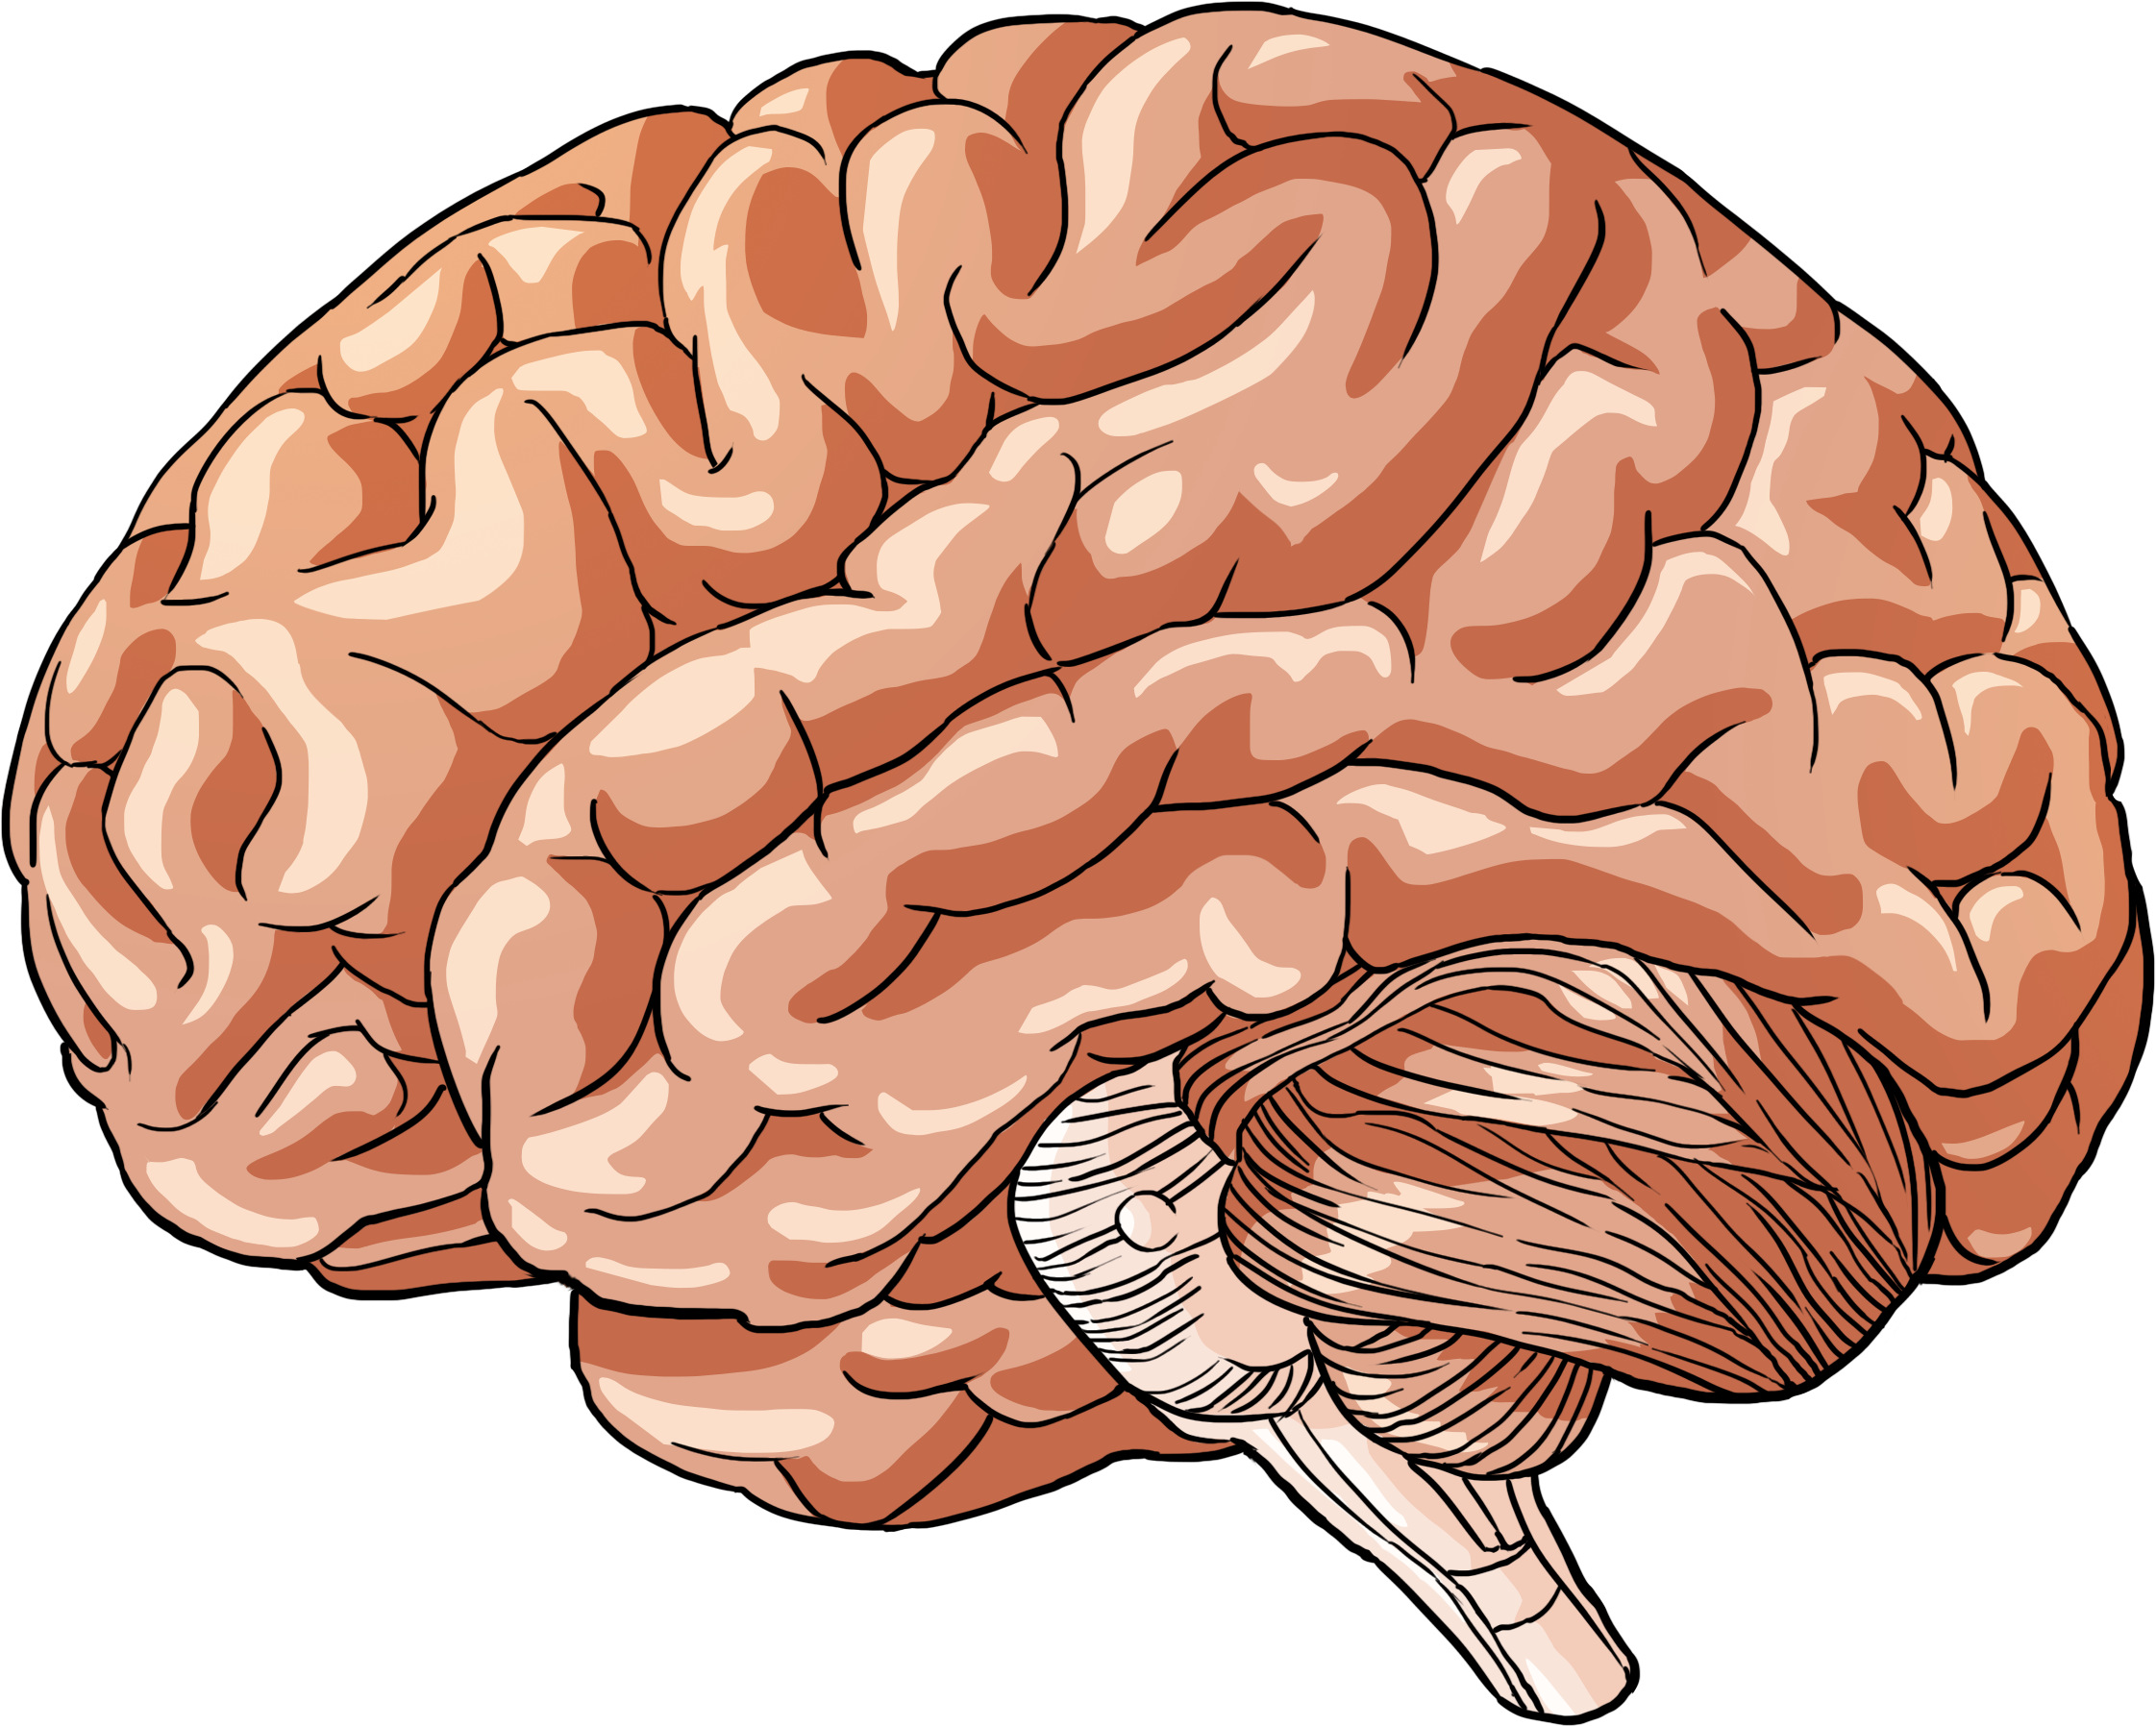 Brain download. Мозг рисунок. Мозг нарисованный.